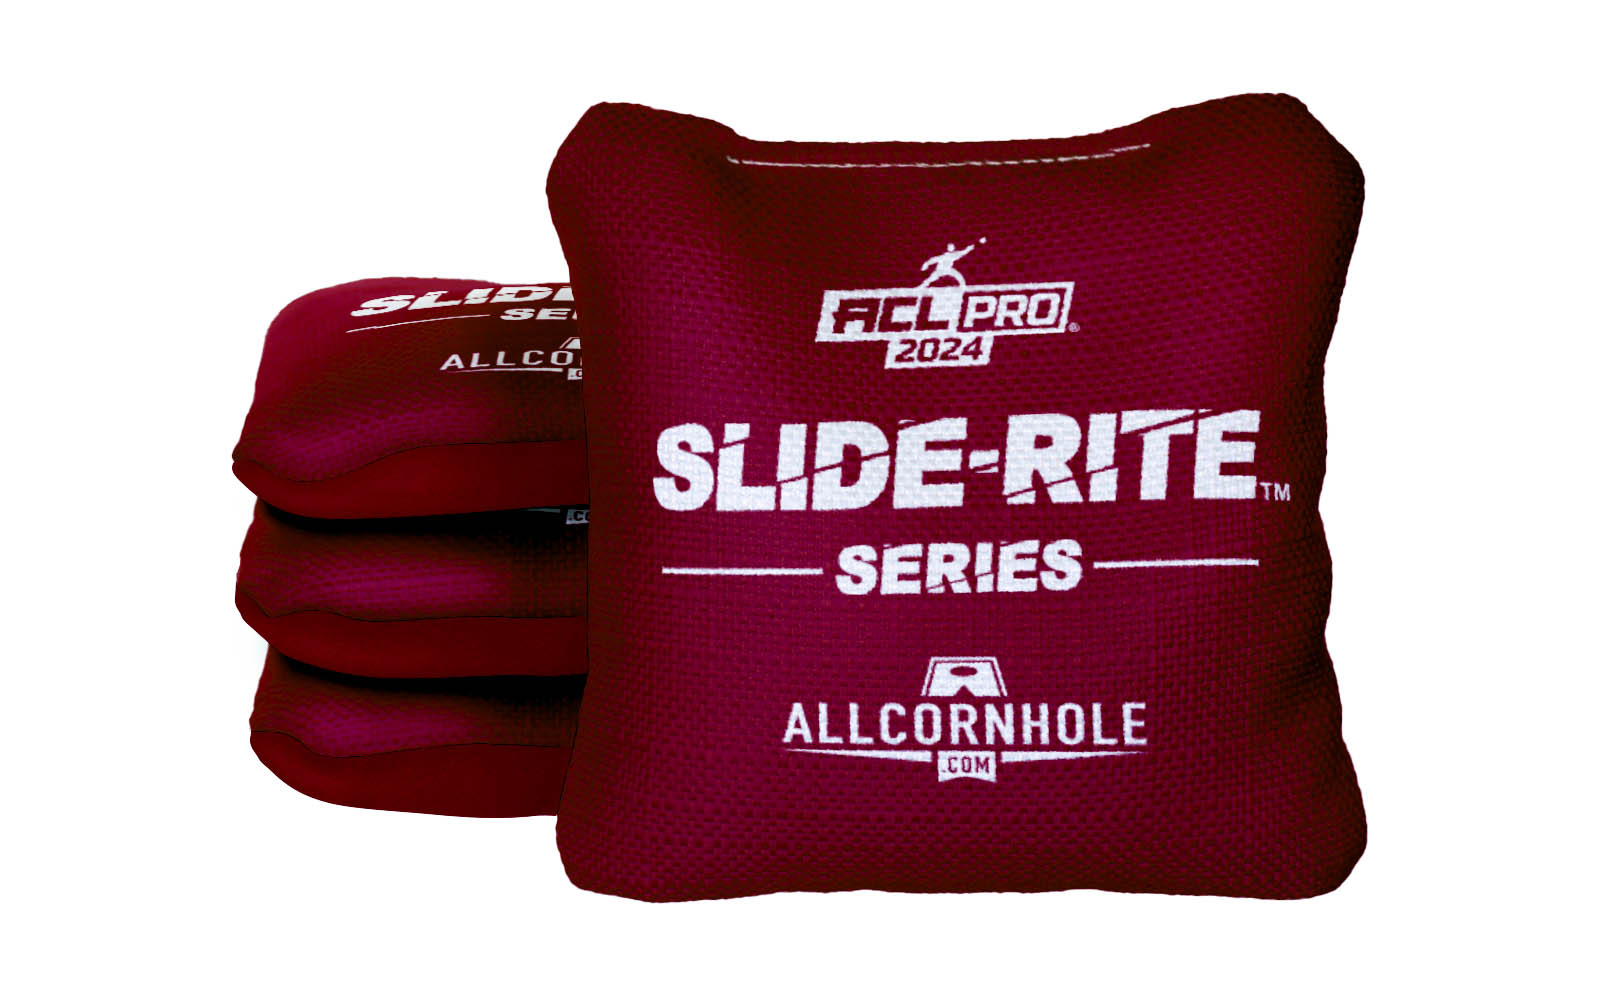 Officially Licensed Collegiate Cornhole Bags - AllCornhole Slide Rite - Set of 4 - Florida State University